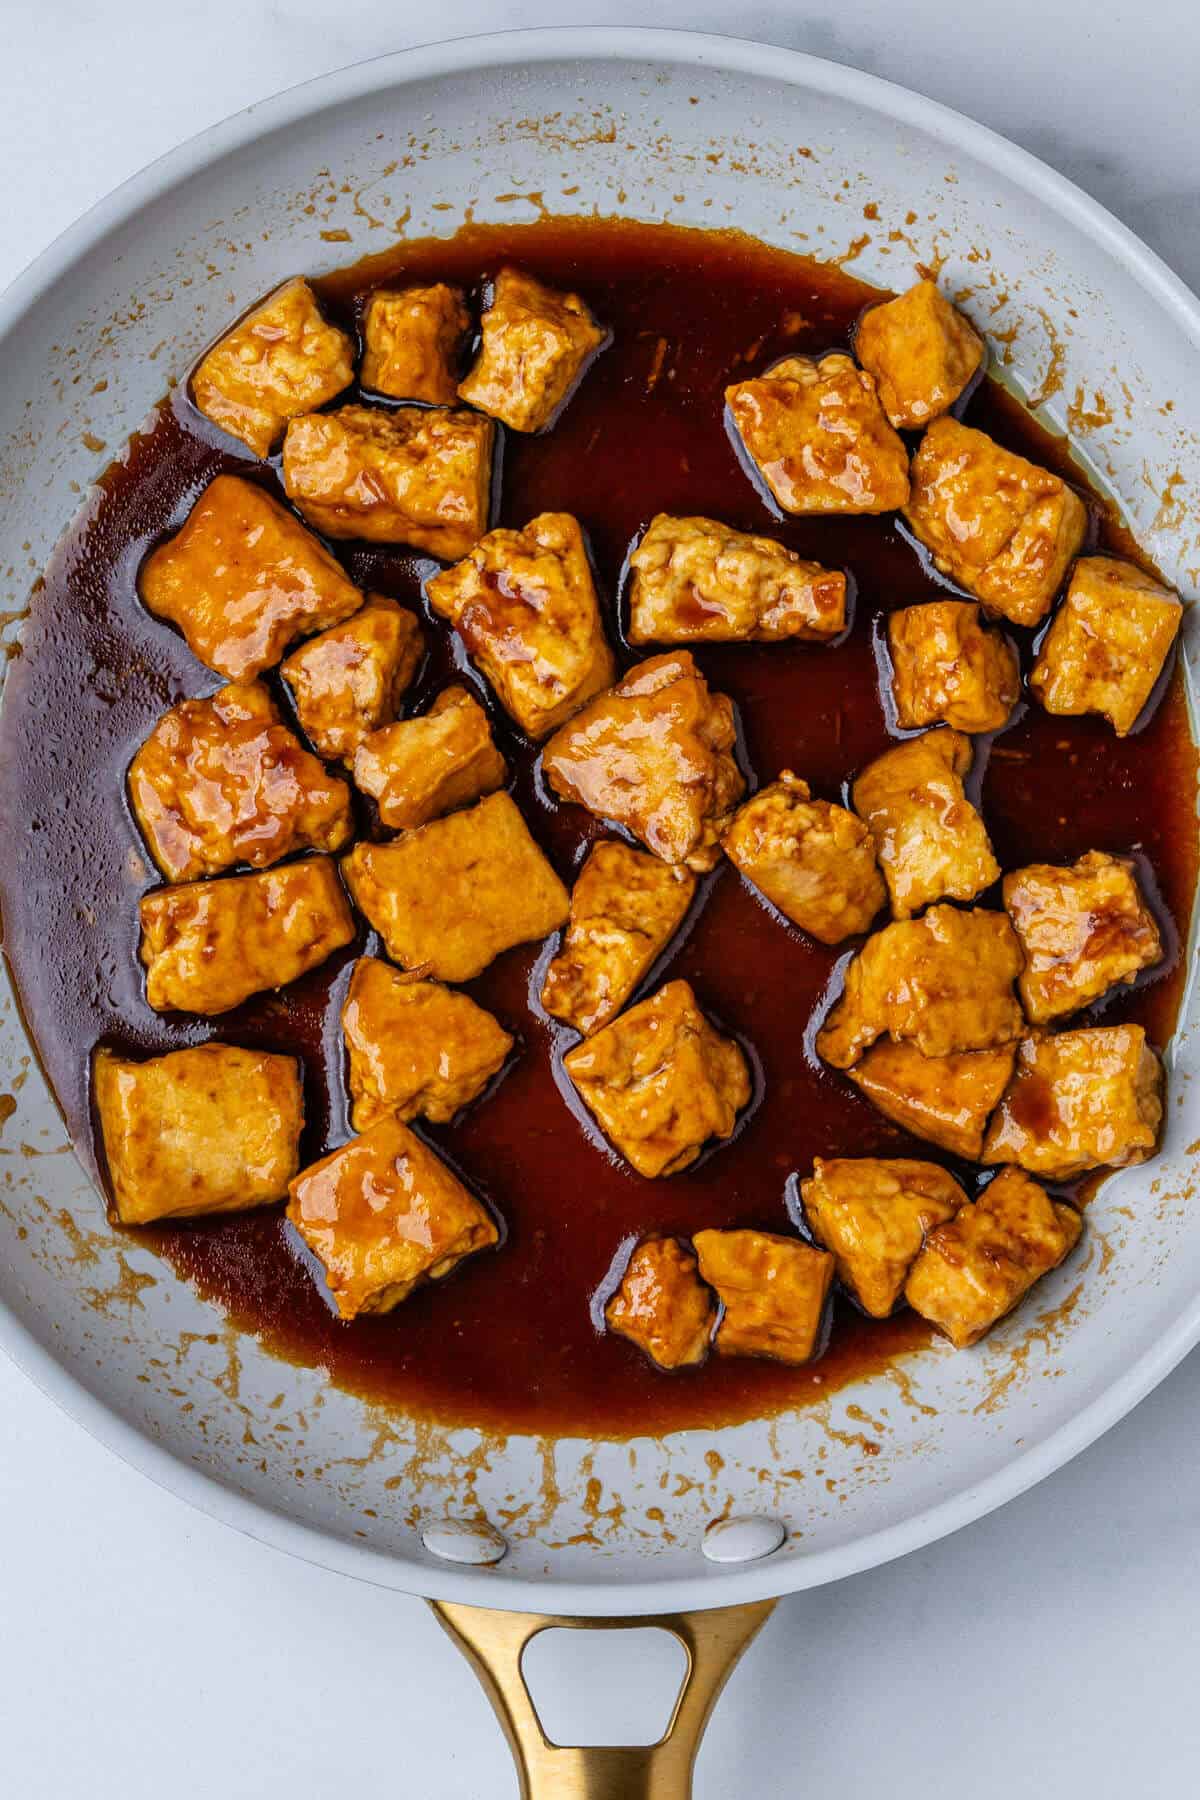 Cooked tofu in a pan covered in teriyaki sauce